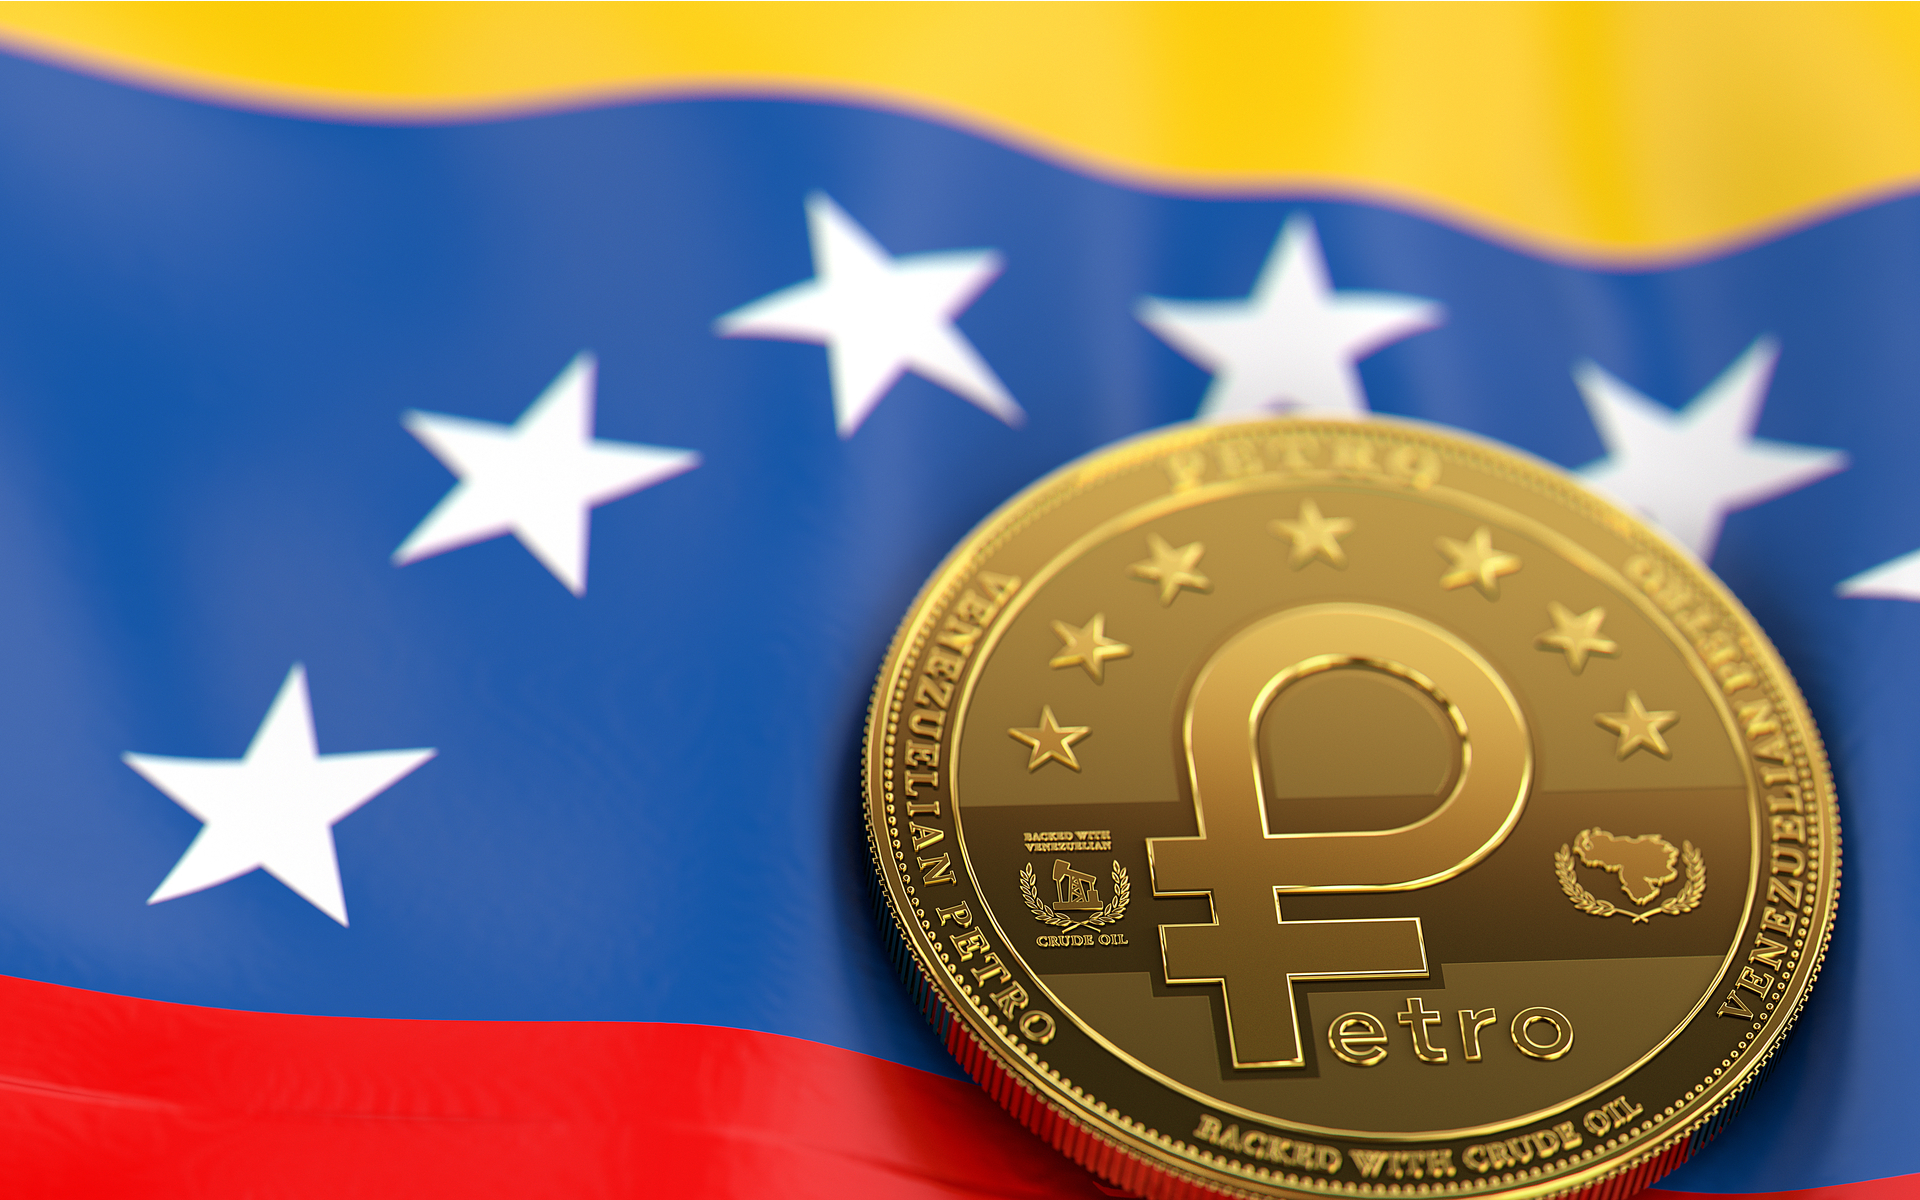 Venezuelan Petro Cryptocurrency is a 'Scam', Say Local Merchants